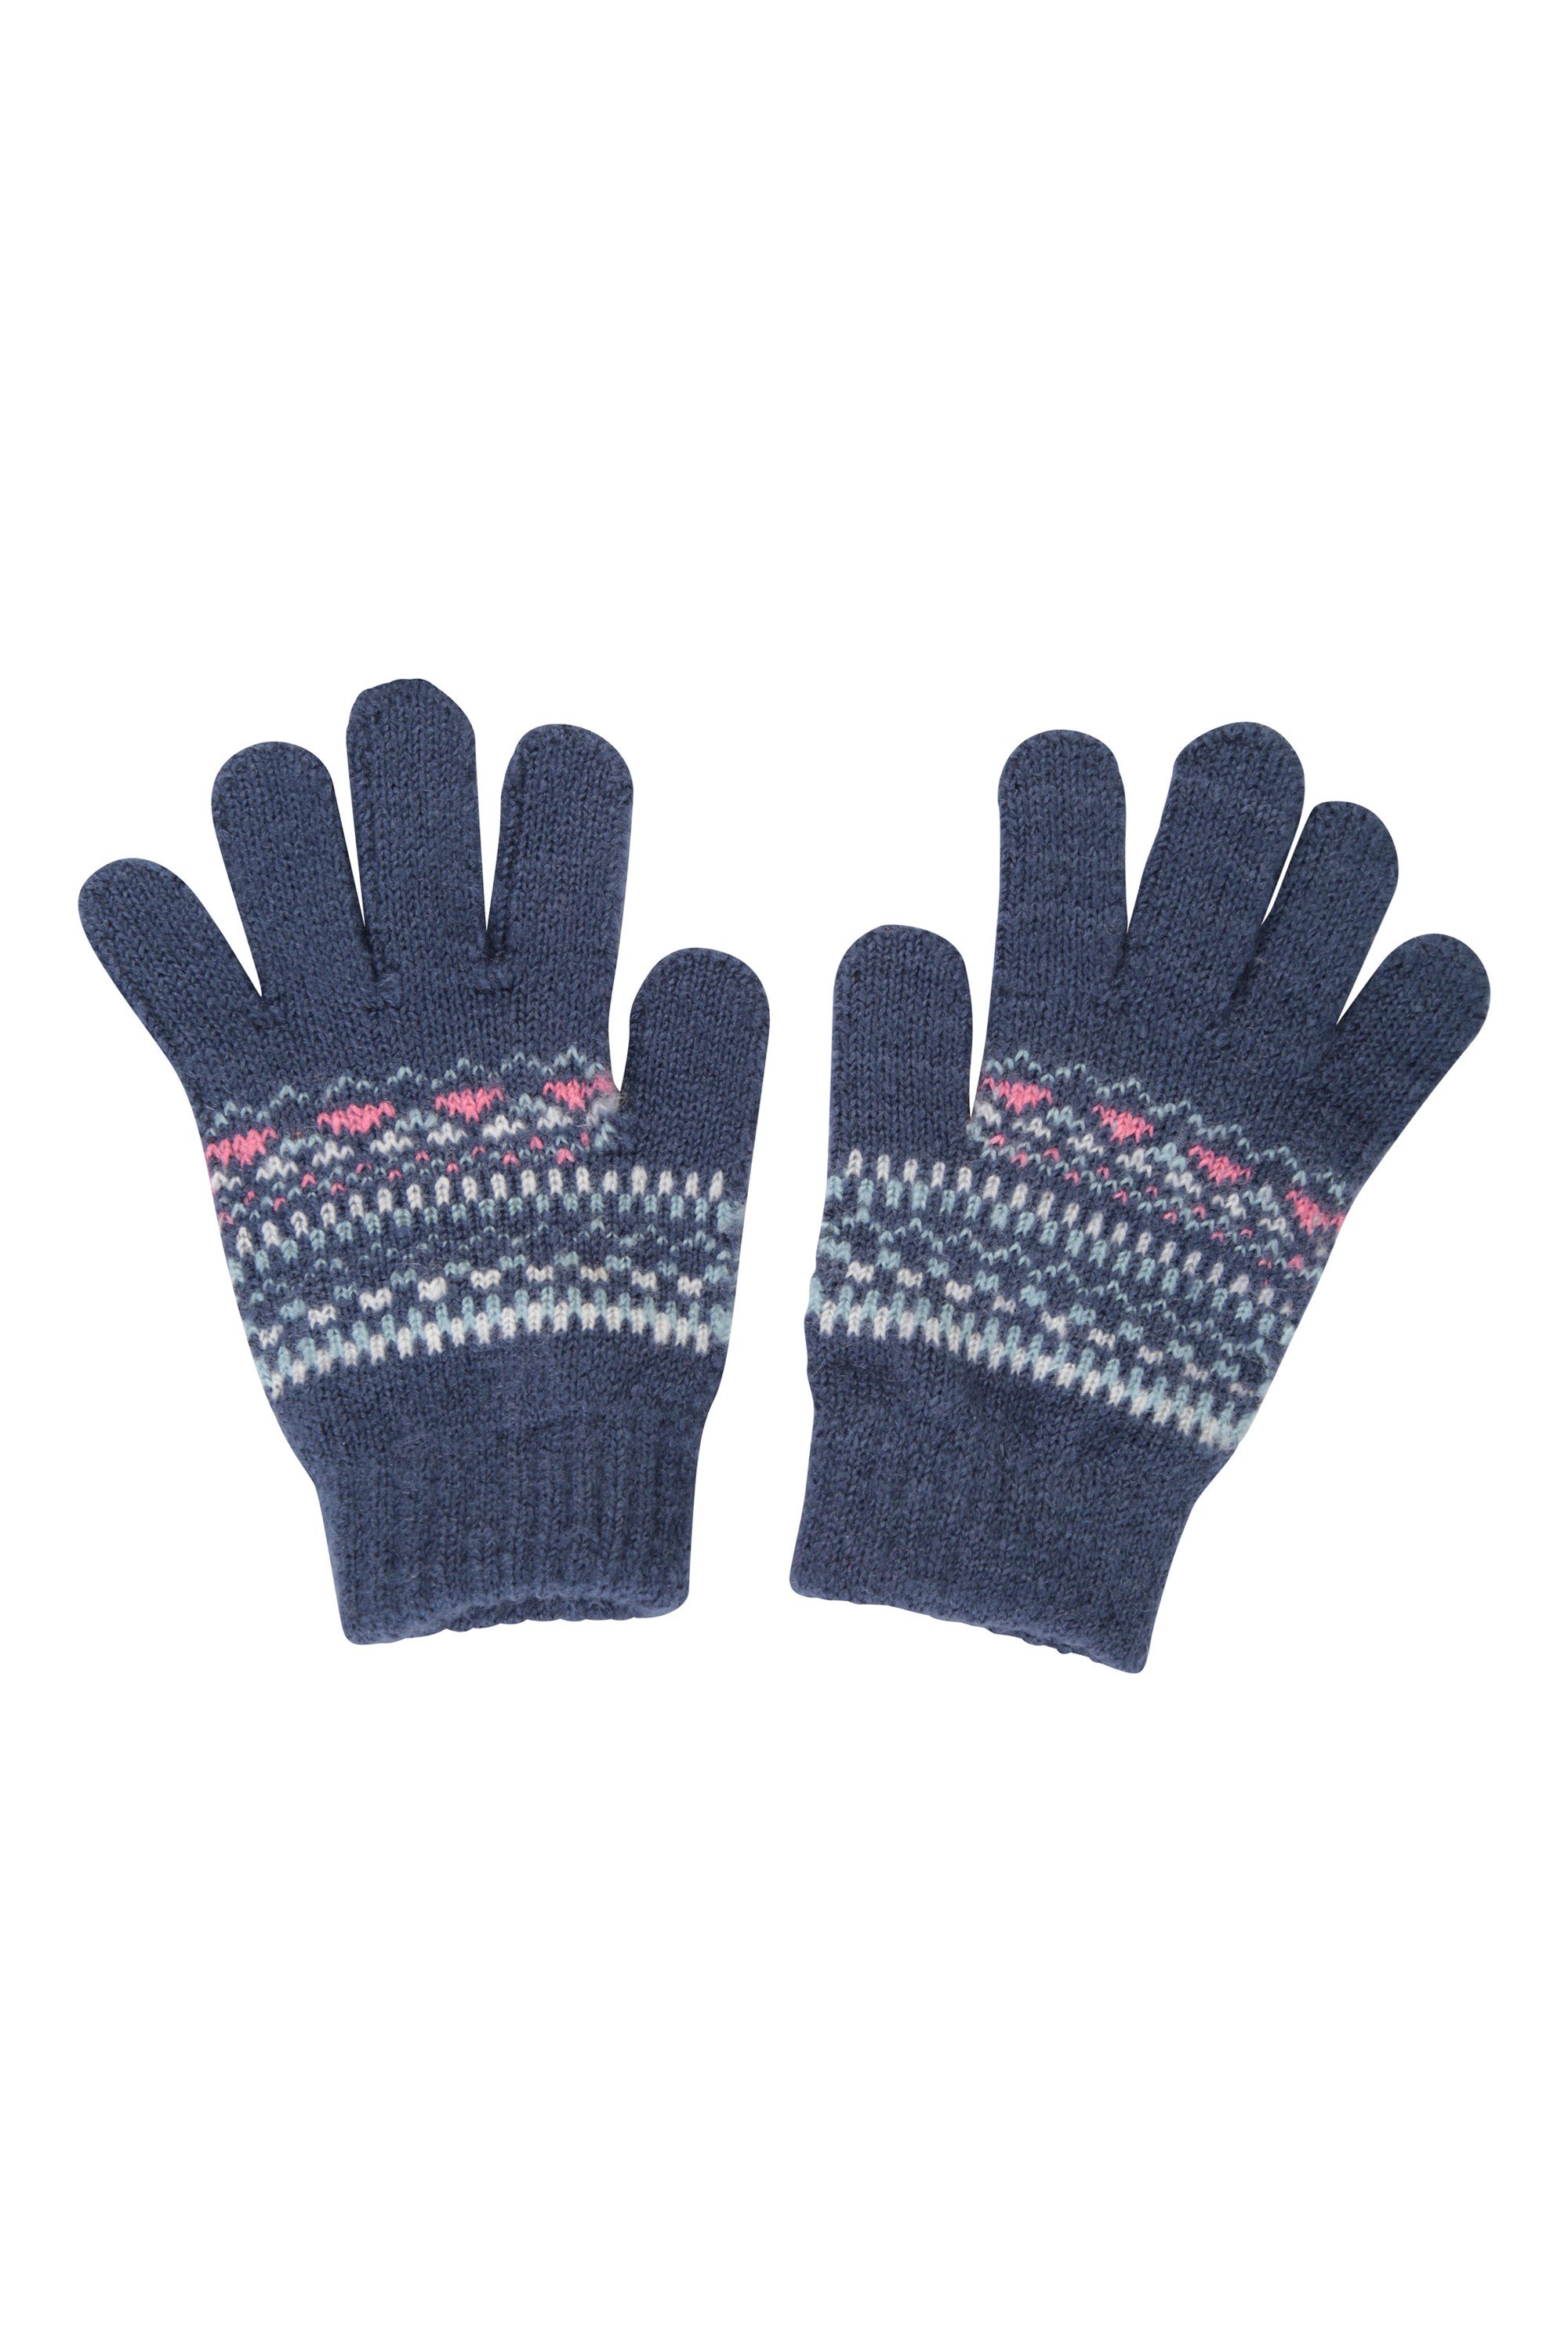 Penguin Knitted Kids Gloves | Mountain Warehouse US